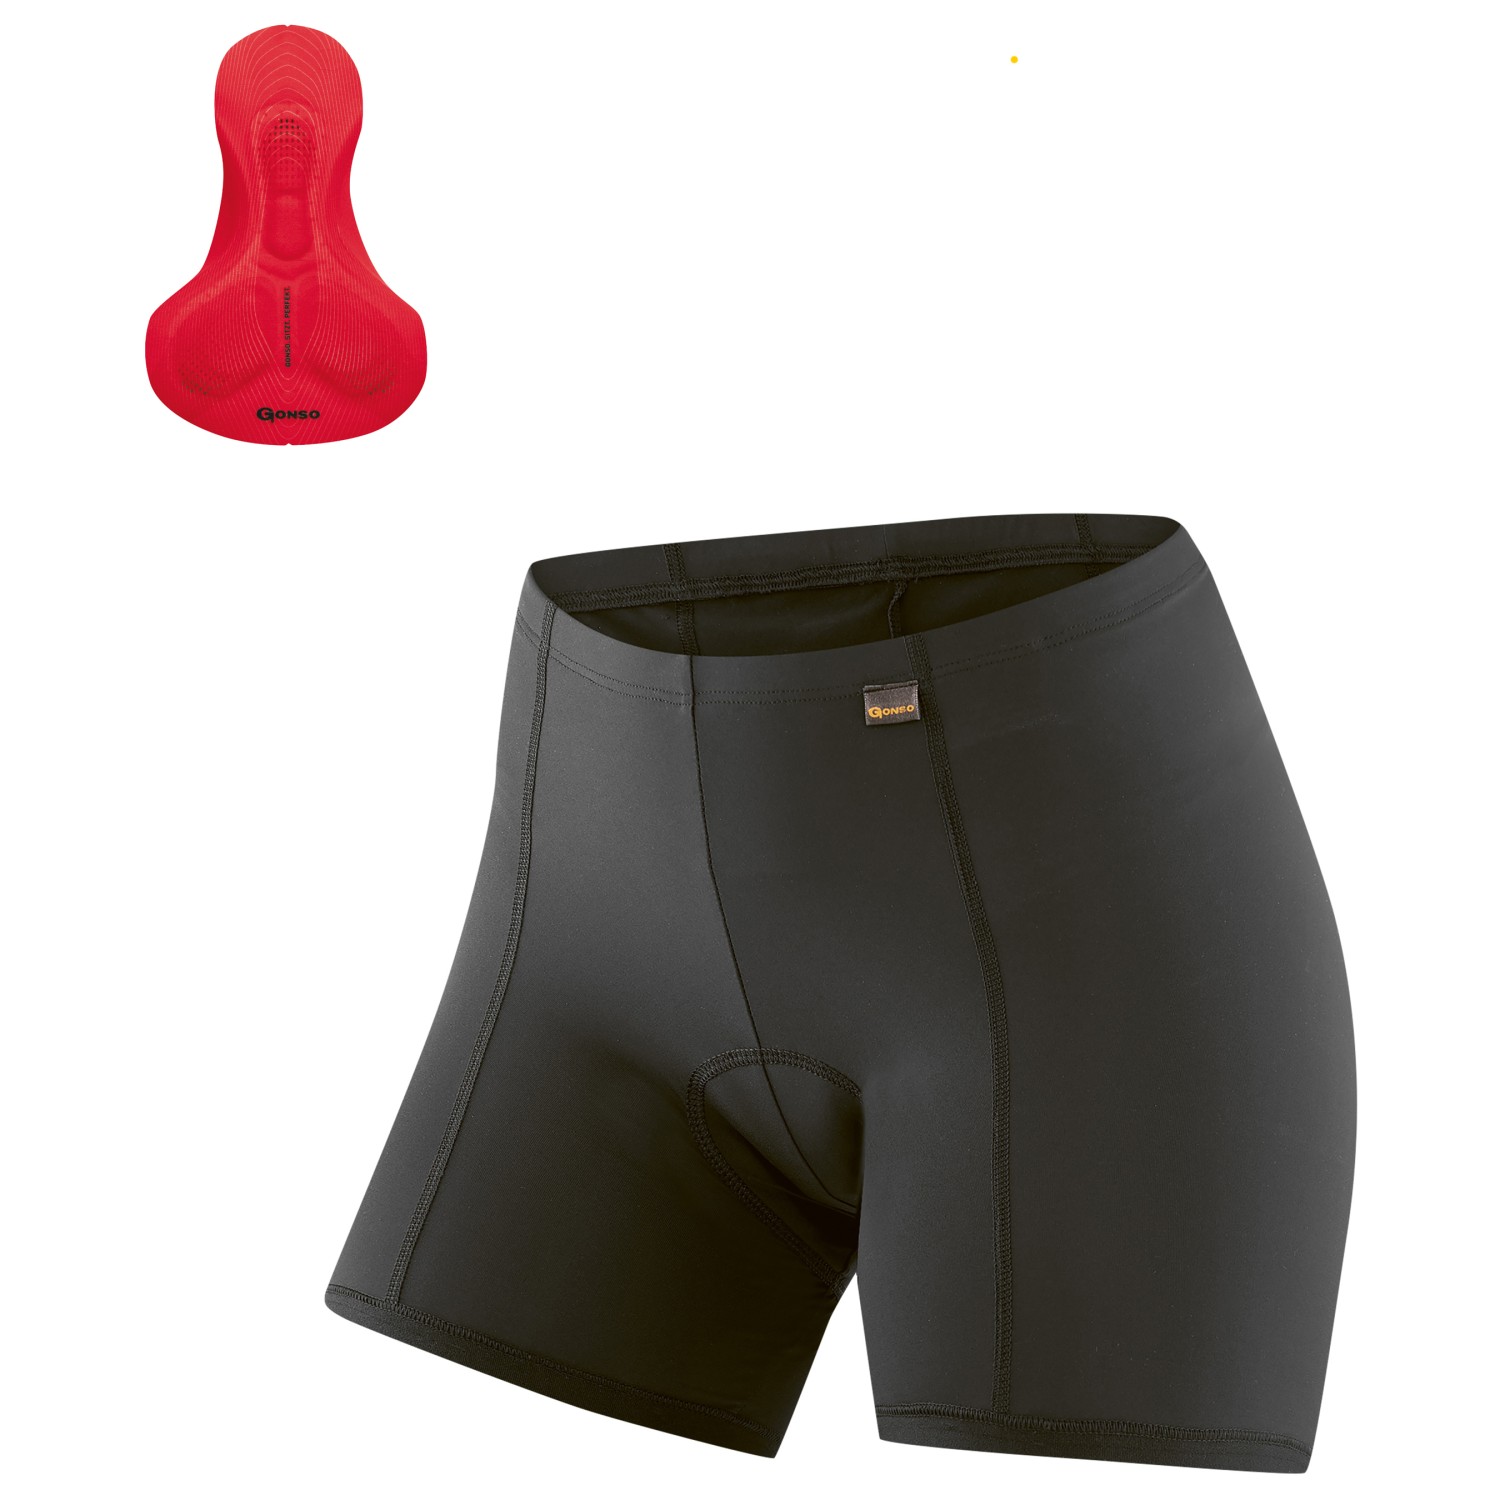 Велосипедные шорты Gonso Women's Sitivo Red Underwear, цвет Black/Fire